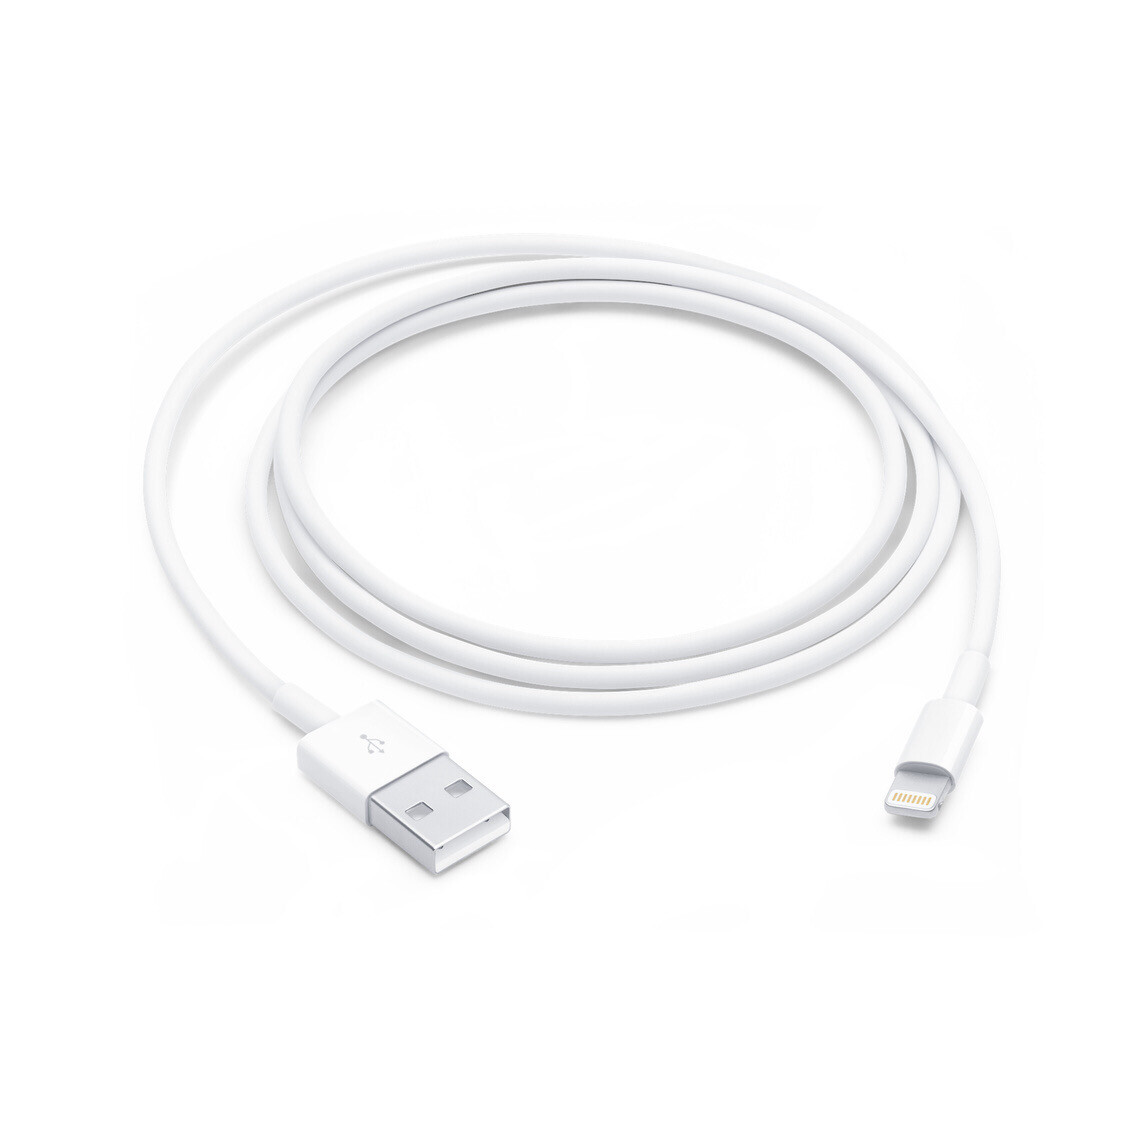 Cable lightning USB para Apple 1m